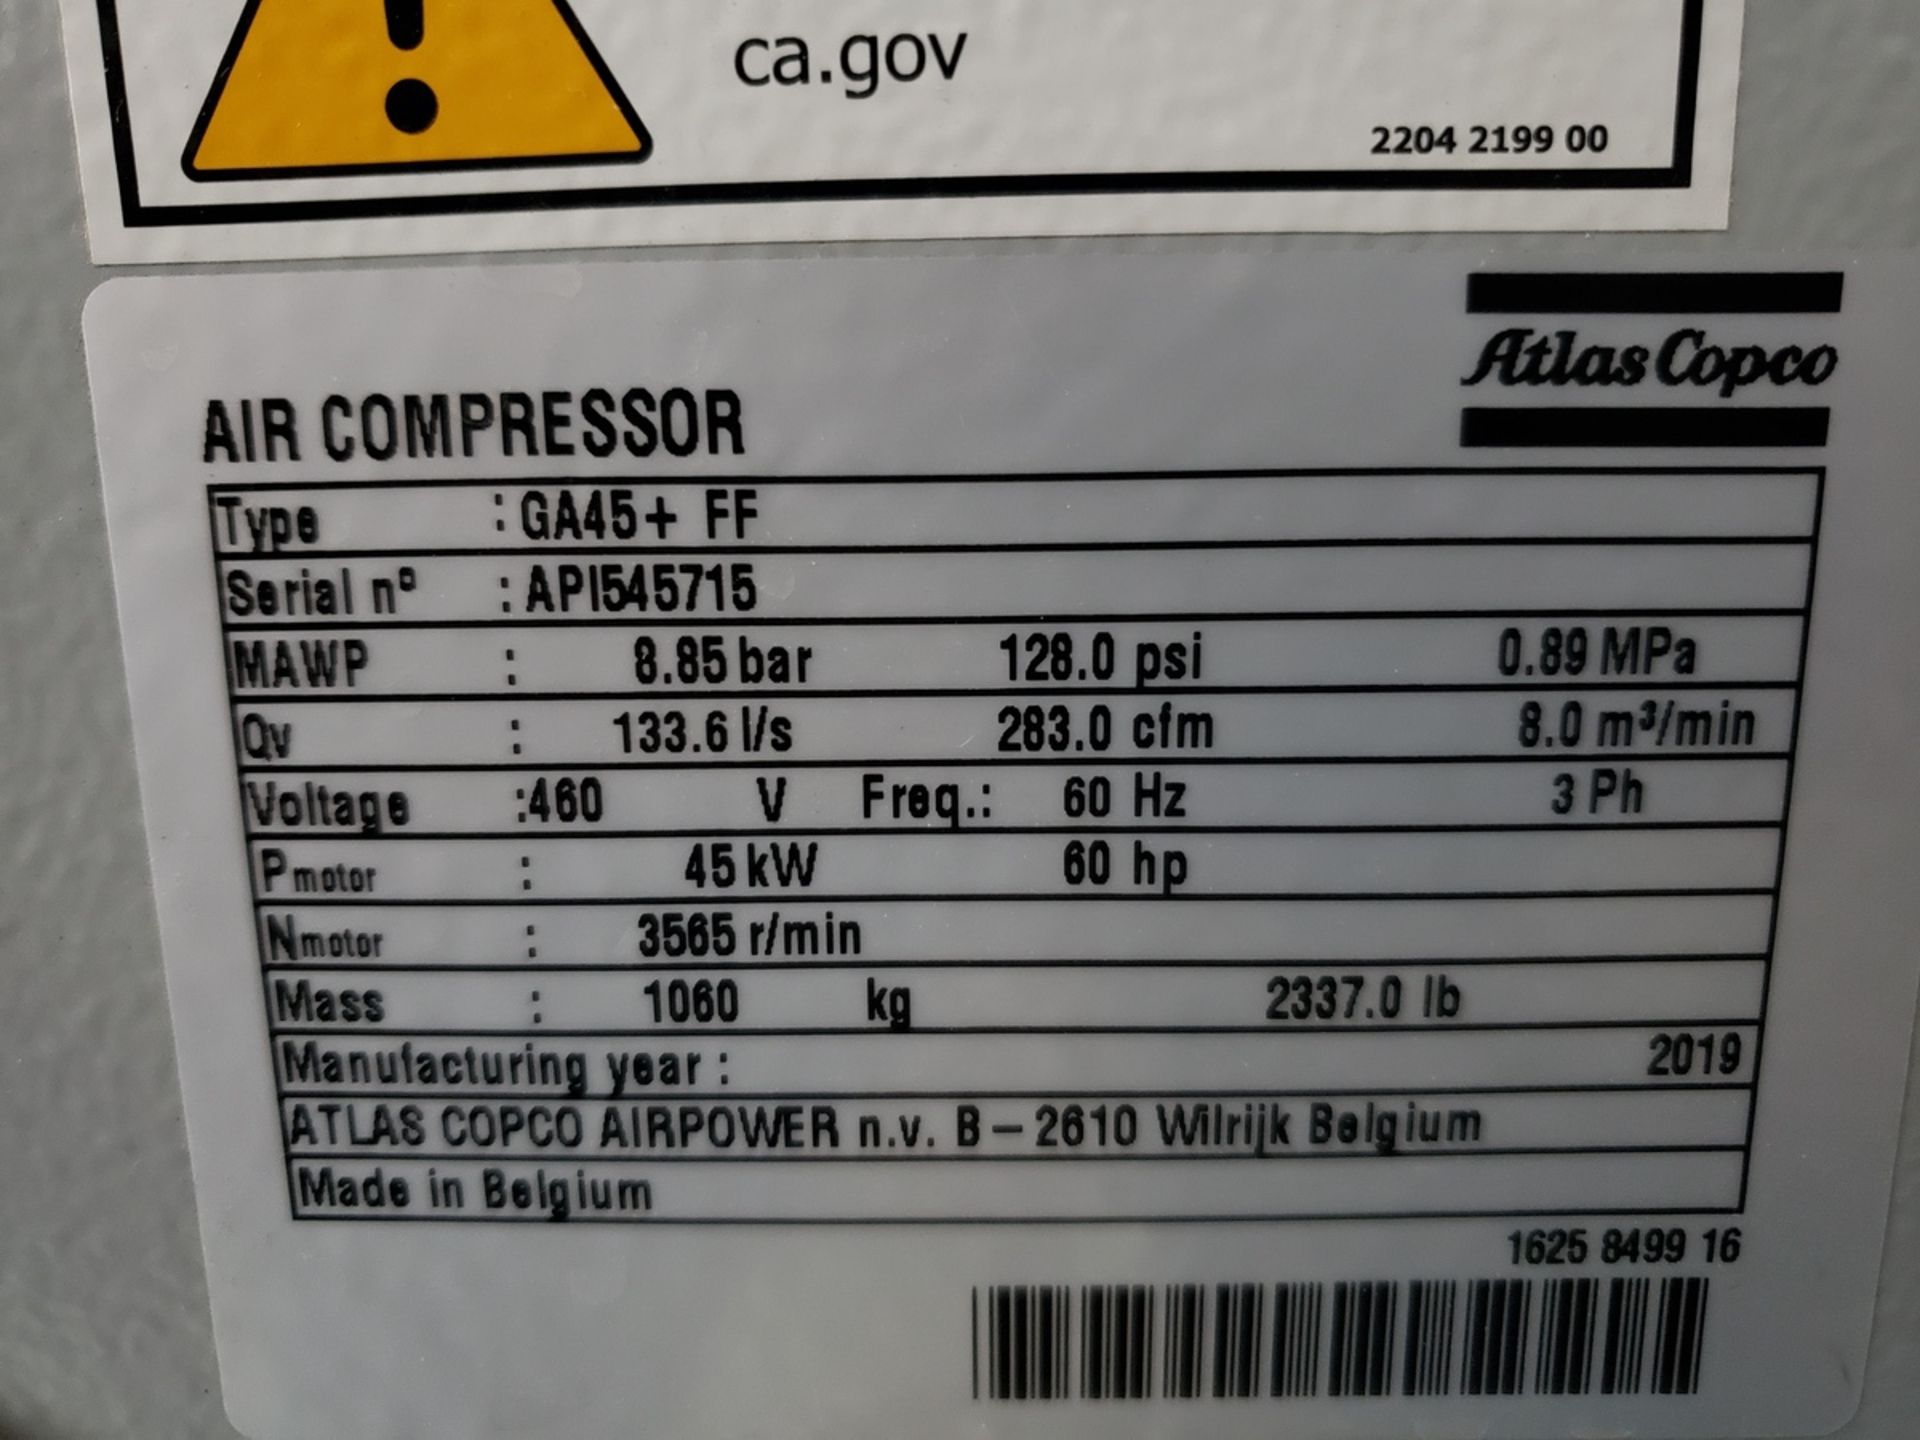 Altlas Copco 60 HP Rotary Screw Air Compressor, M# GA45+FF, S/N API545715 | Rig Fee $750 - Image 2 of 3